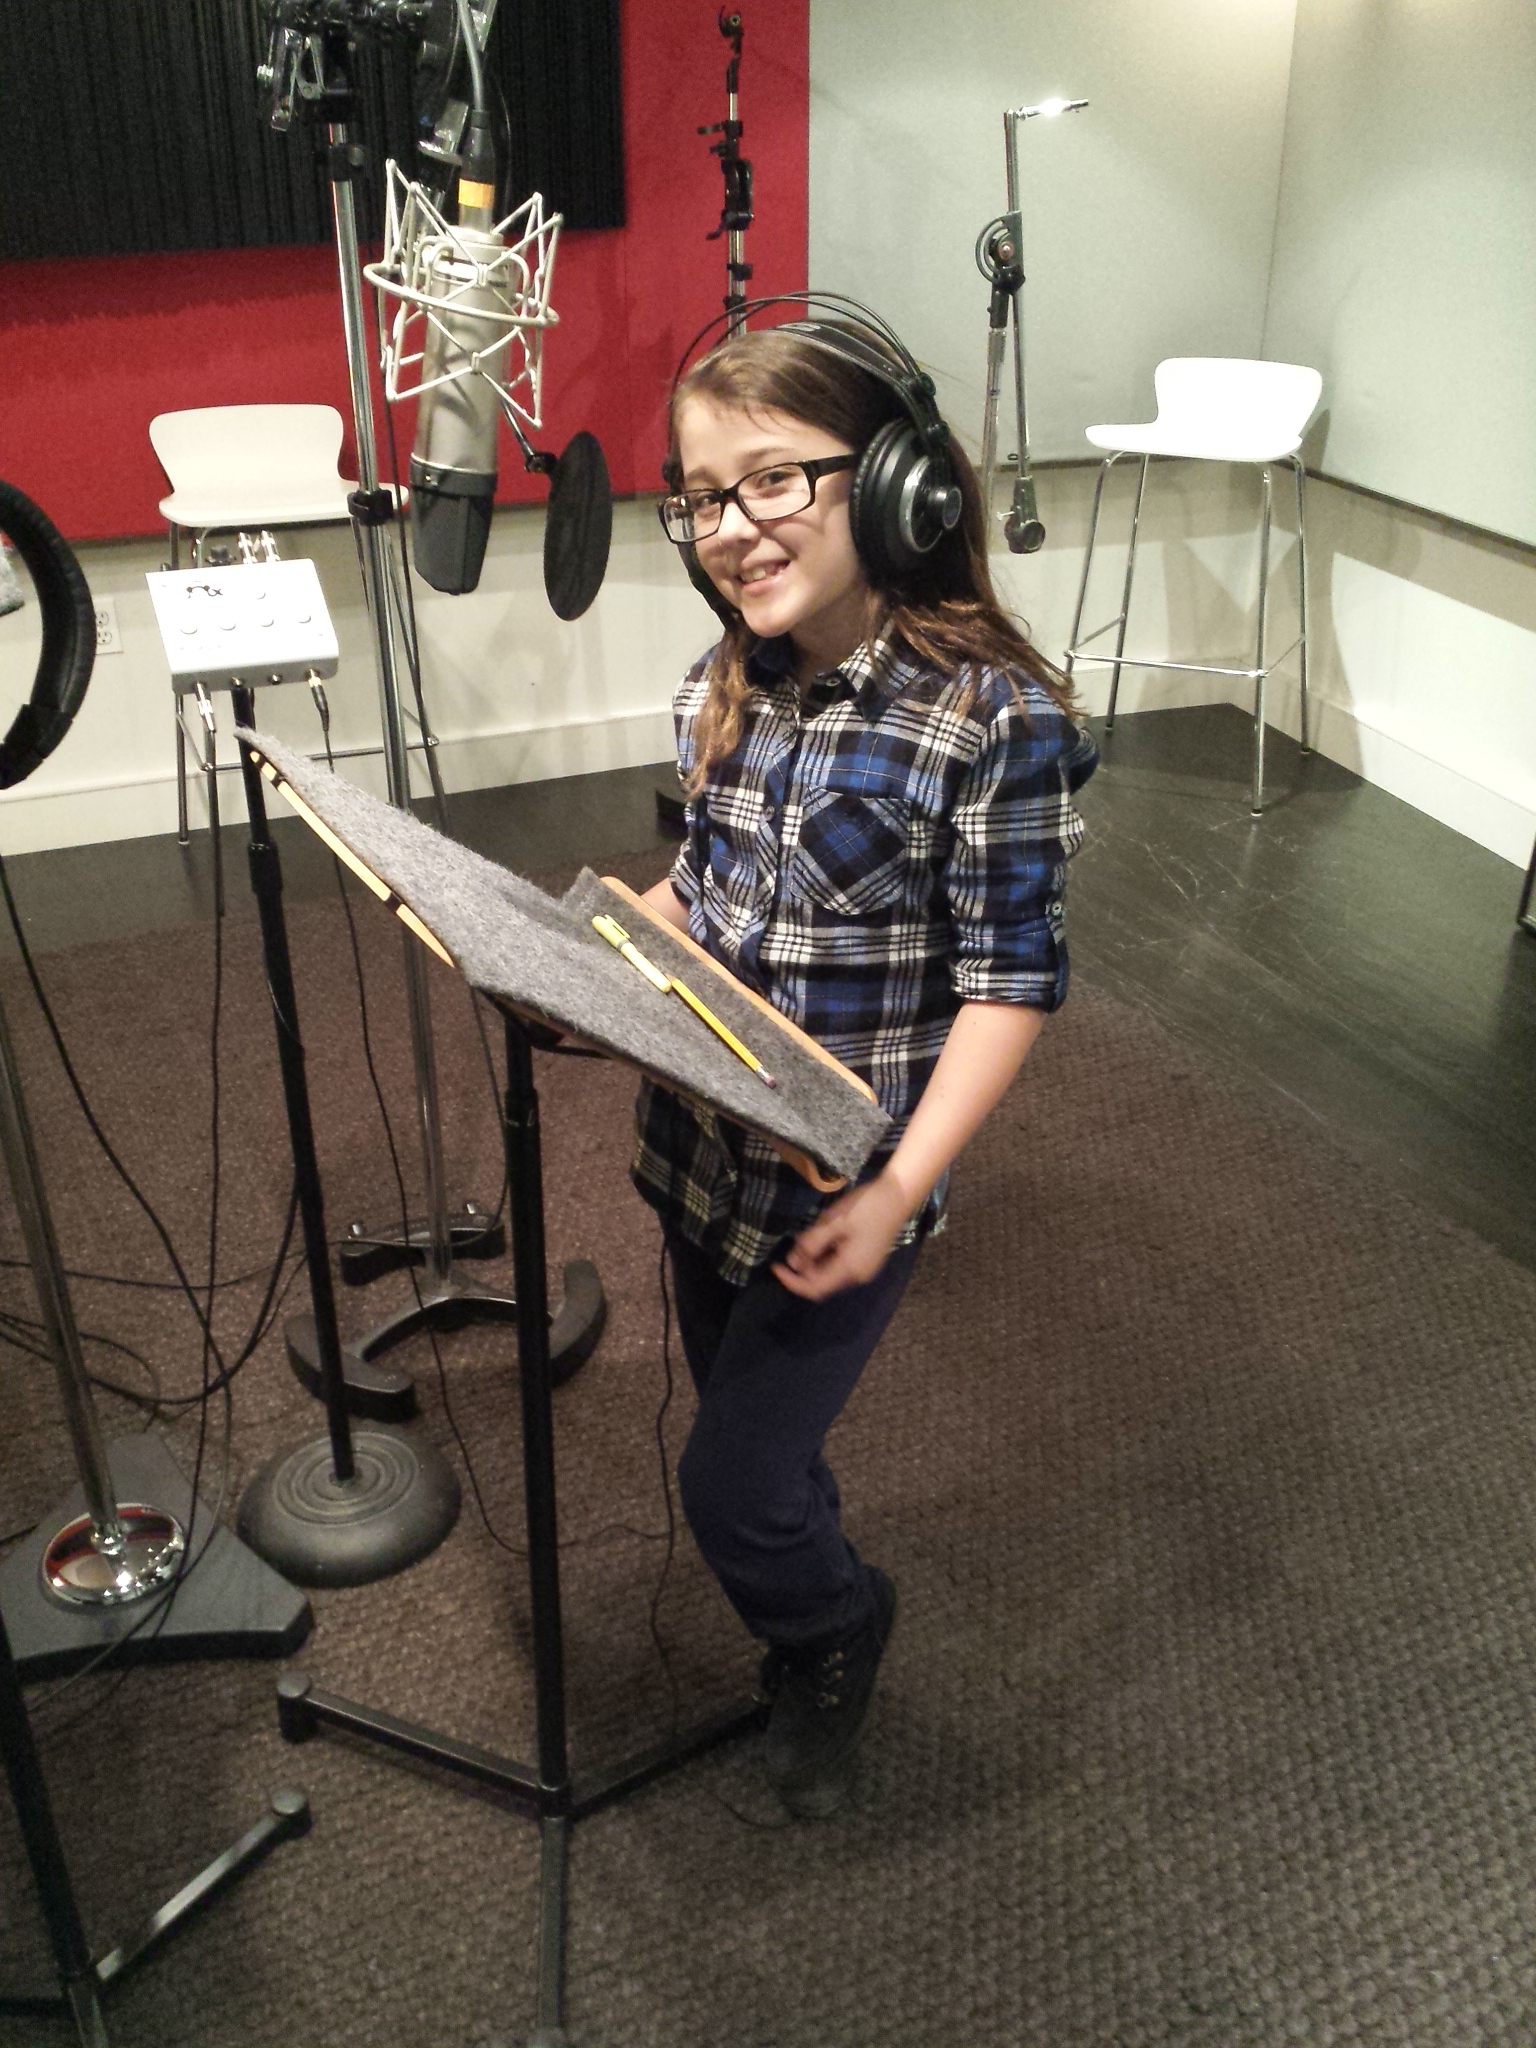 Breanna recording at Nickelodeon Studios